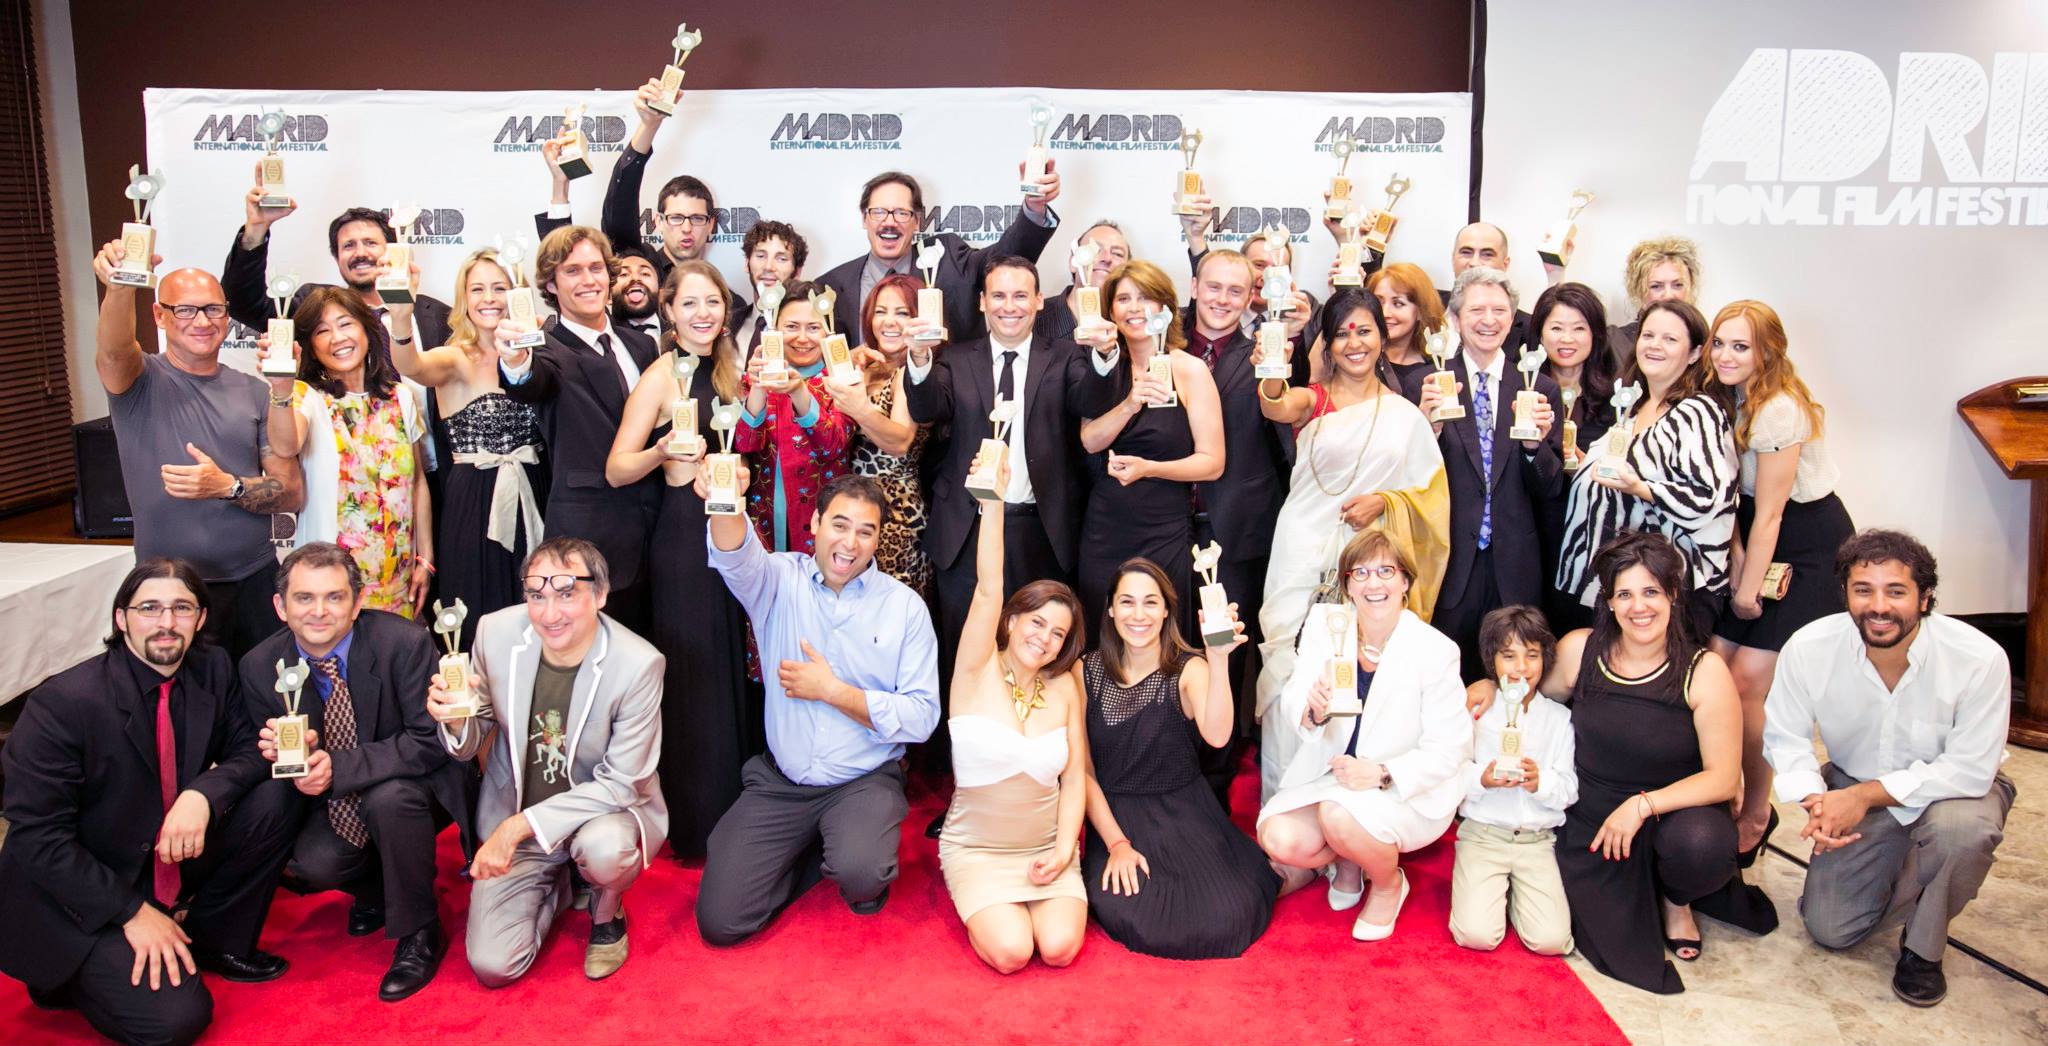 Award Winners' shot at Madrid International Film Festival 2013